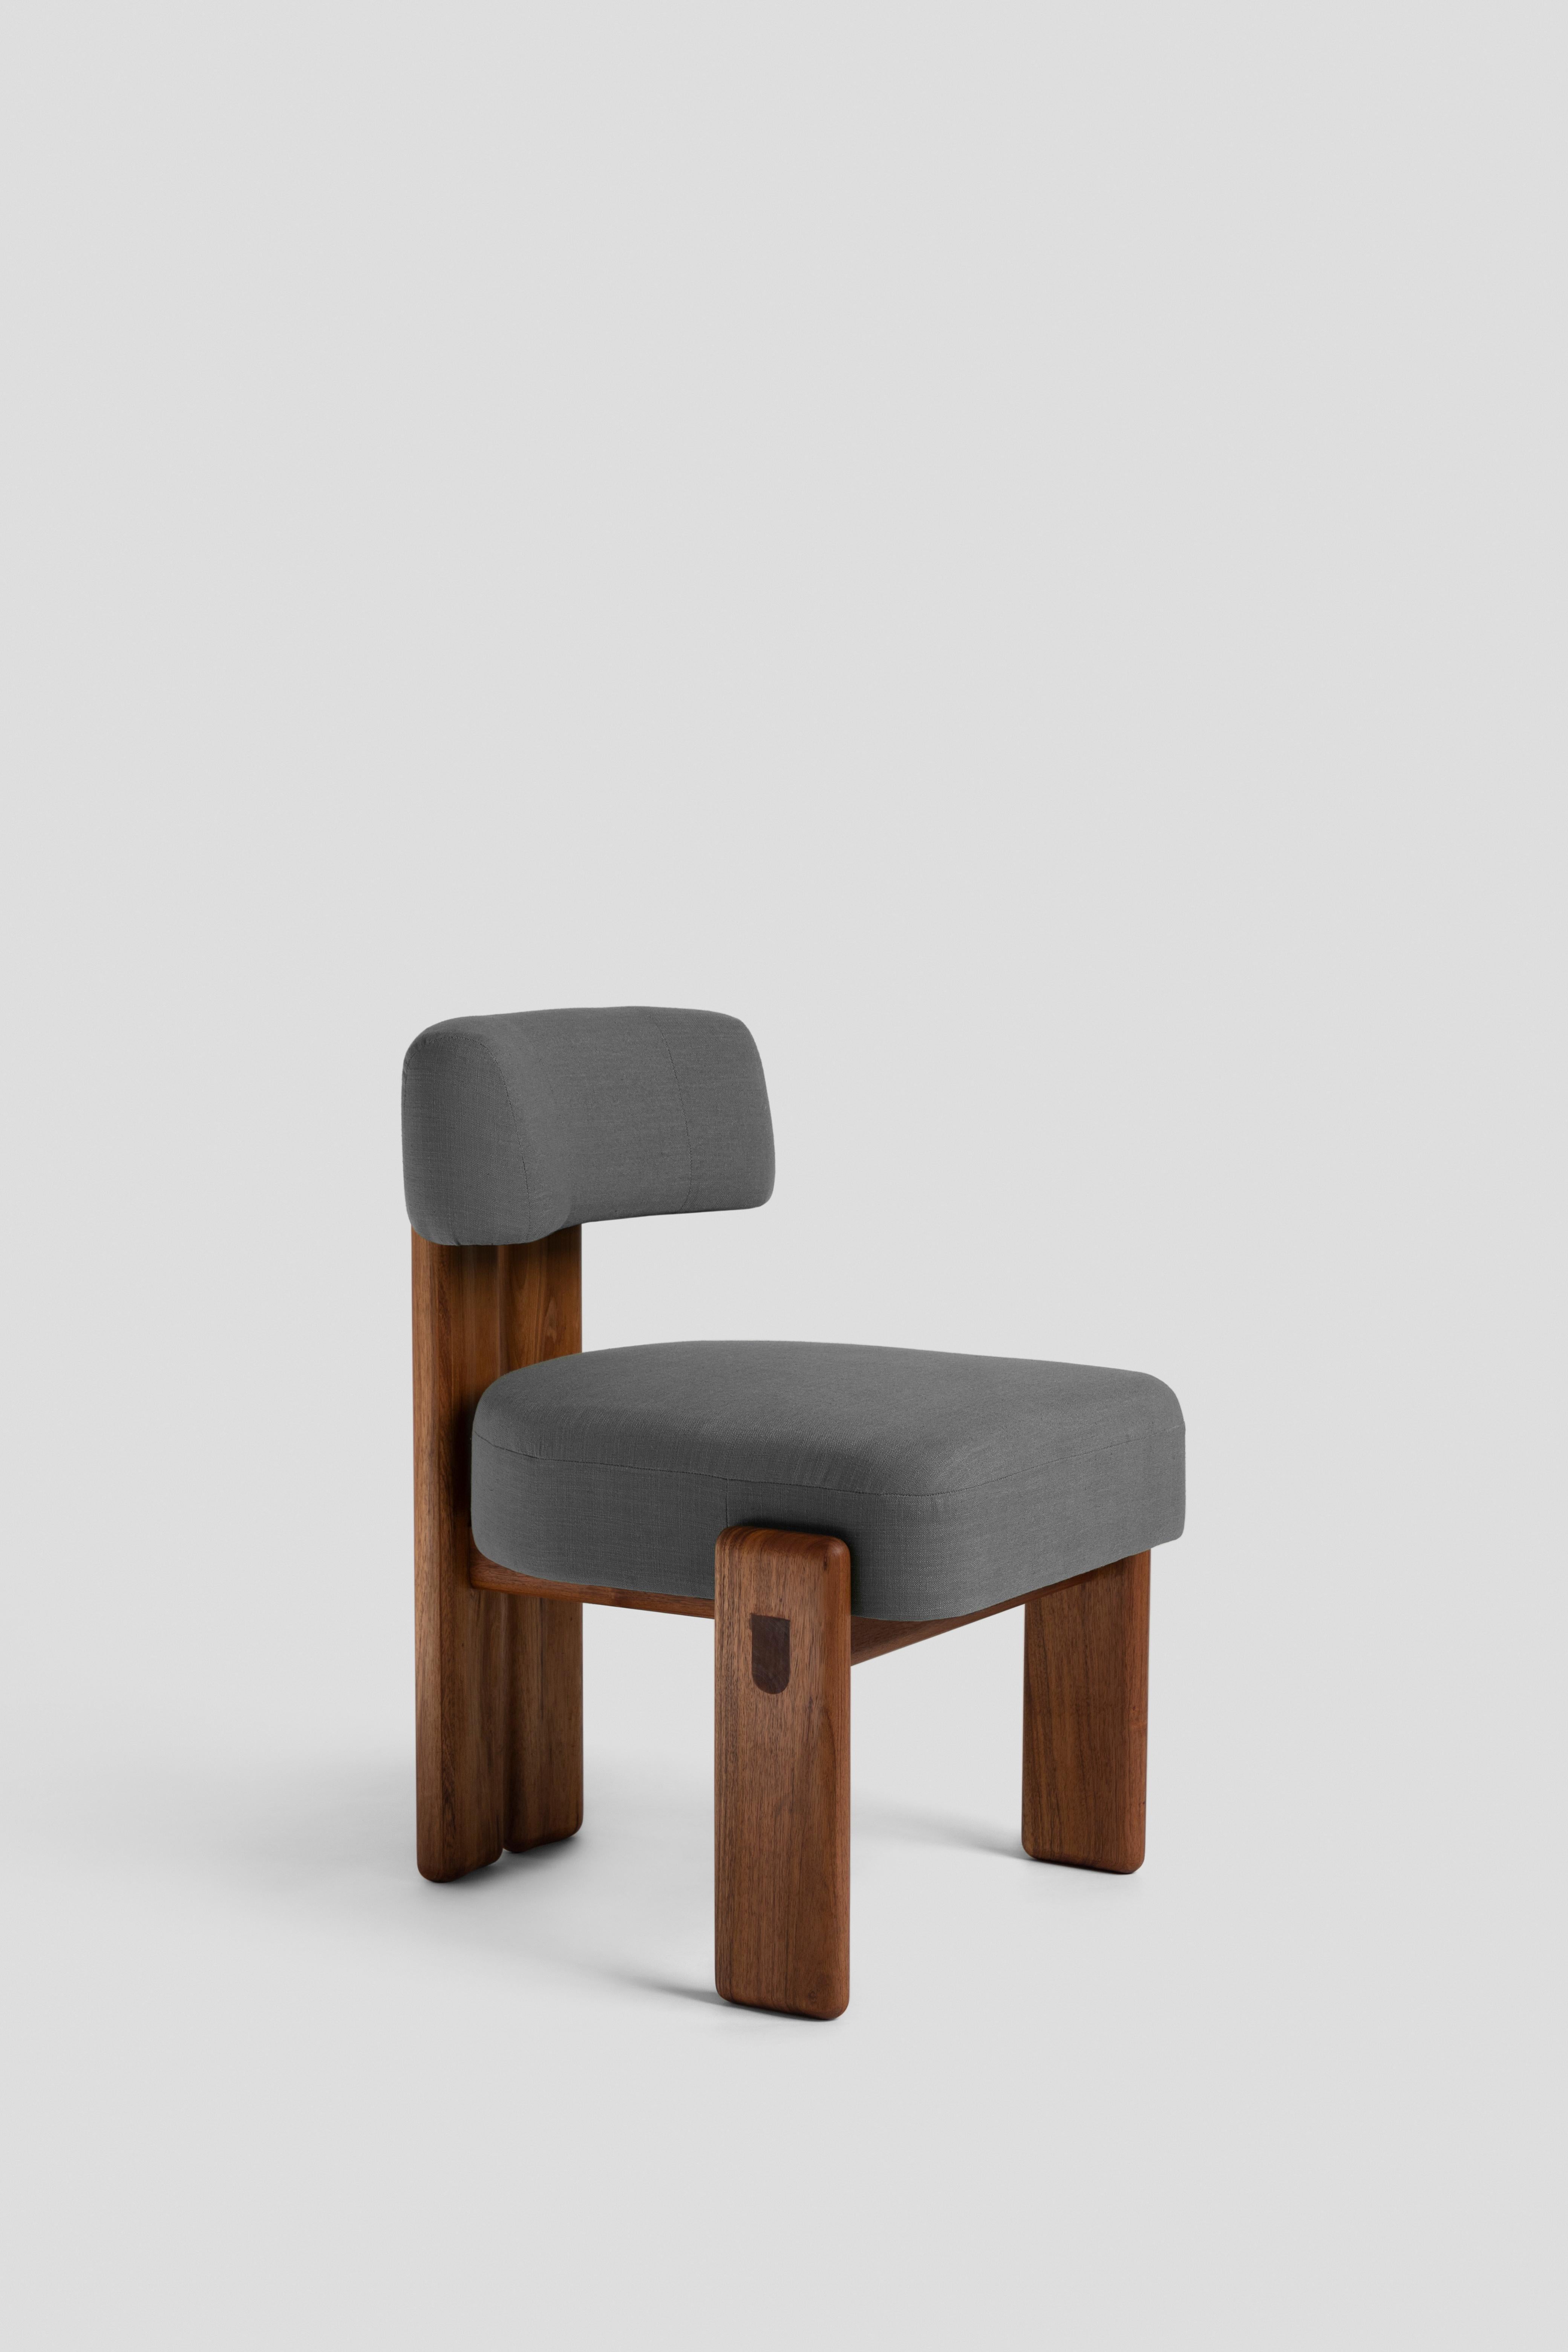 De la Paz Dining Chair Solid Wood, Contemporary Mexican Design For Sale 3